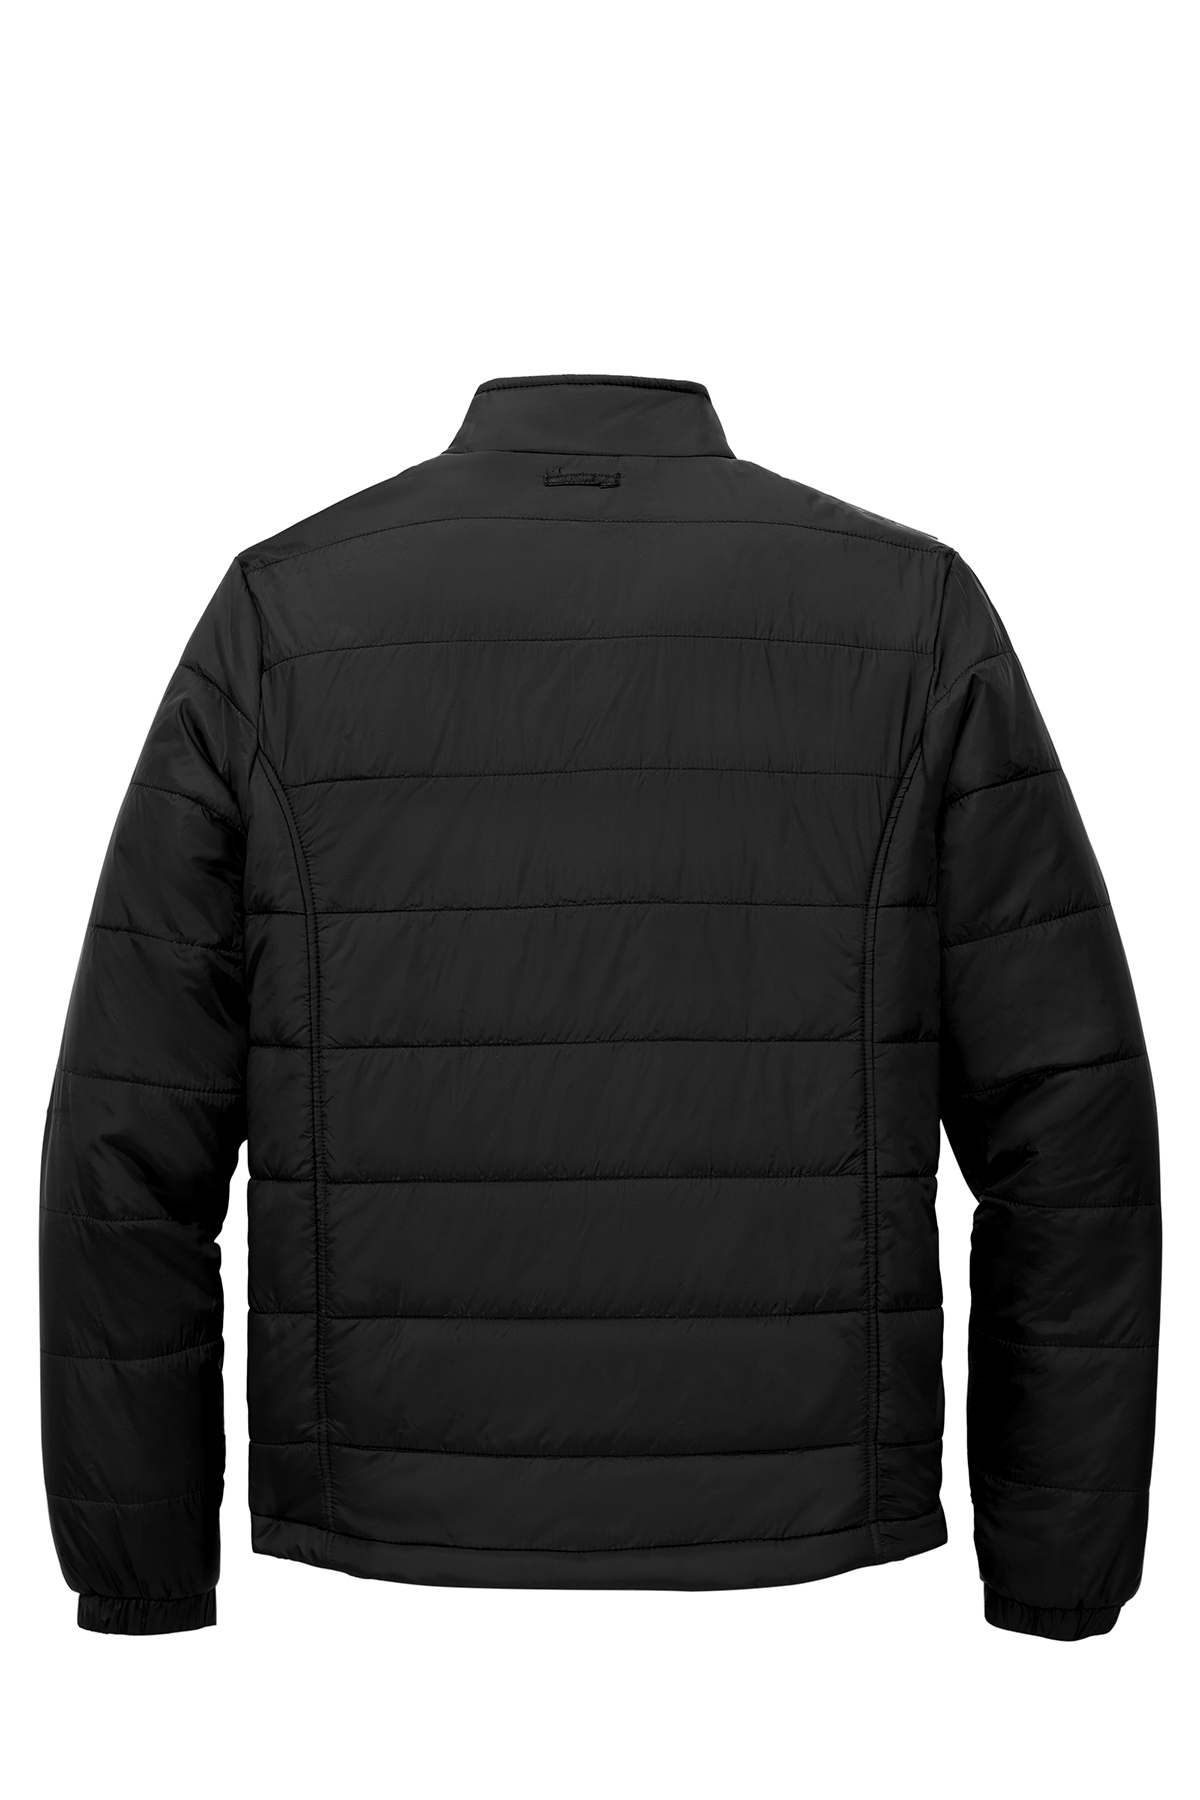 Port Authority Vortex Waterproof 3-in-1 Jacket | Product | Company Casuals